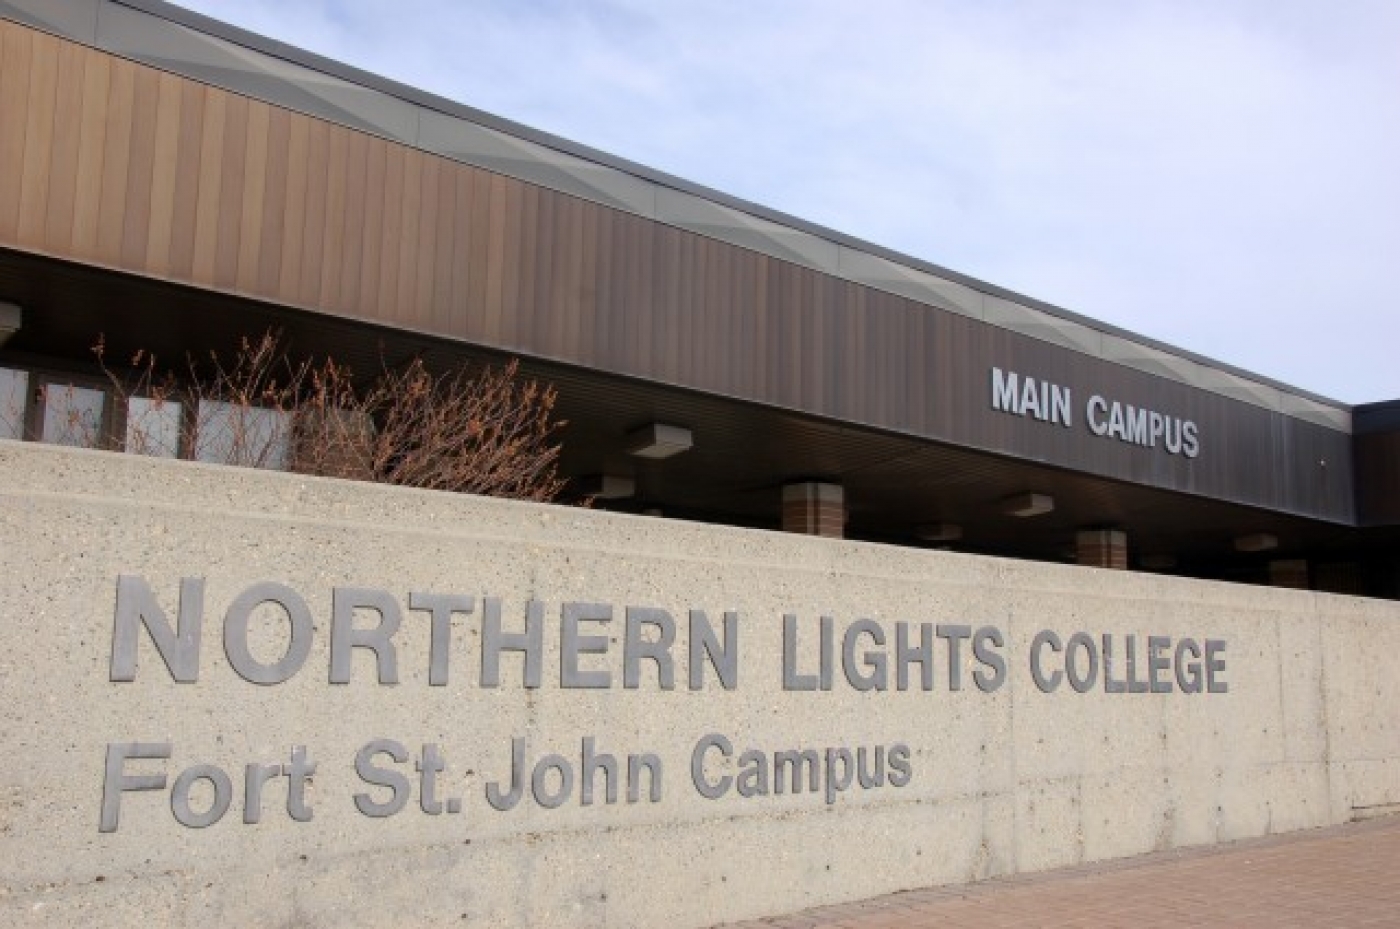 Northern Lights College - Fort St. John Campus